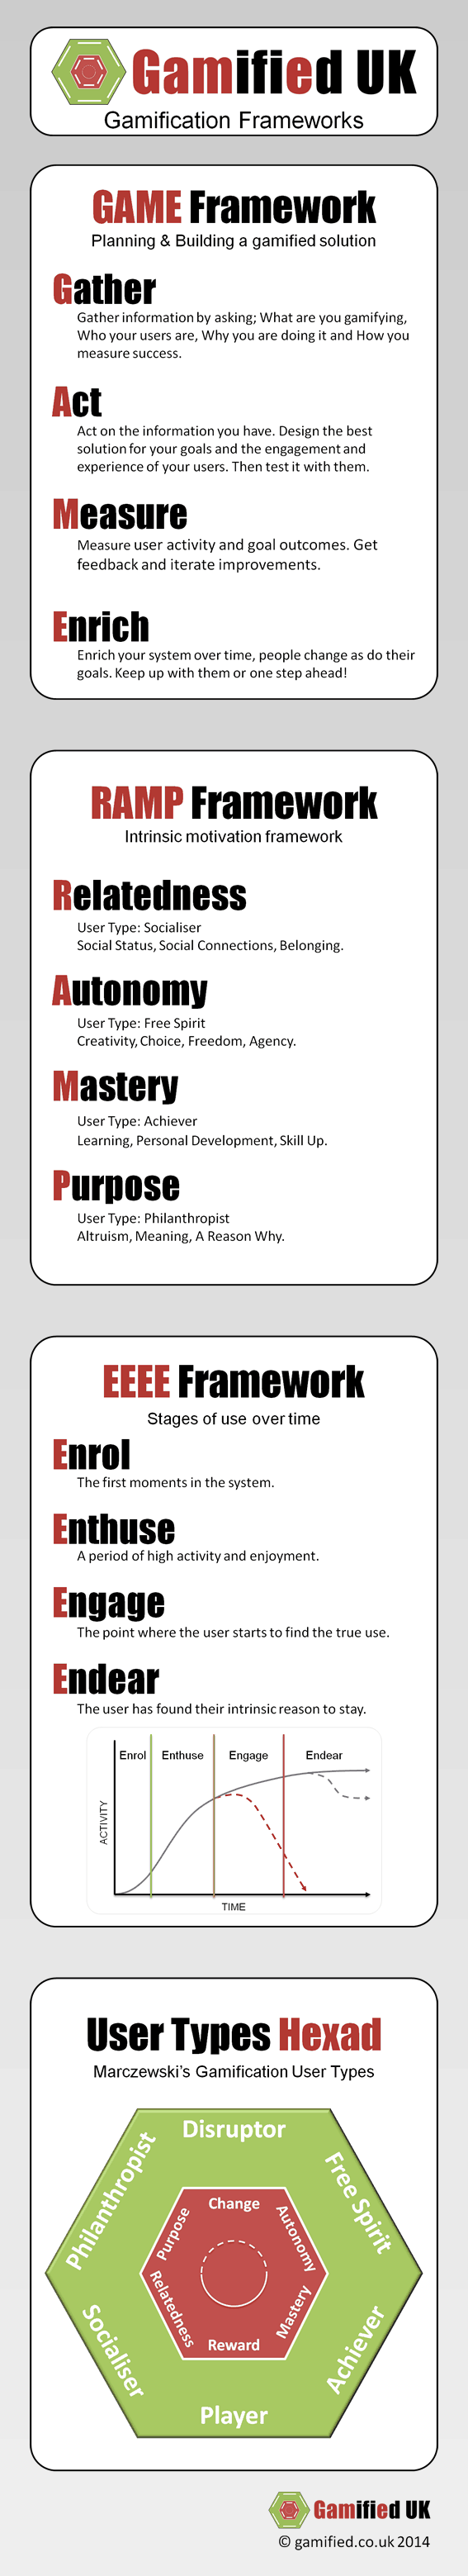 Gamification frameworks 2014 The EEEE User Journey Framework